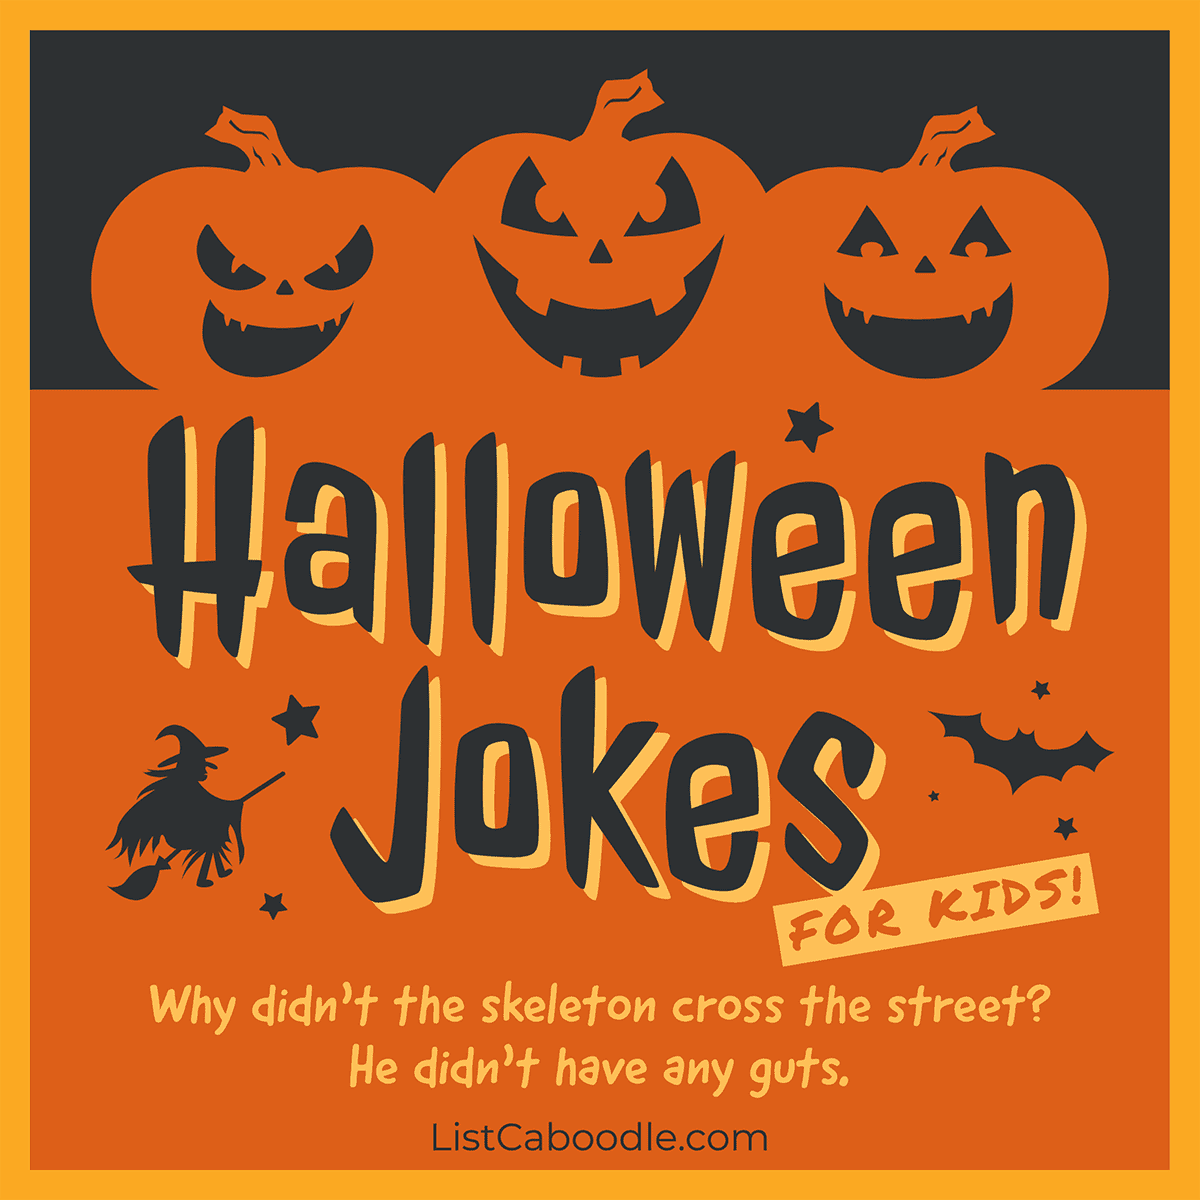 Halloween jokes for kids